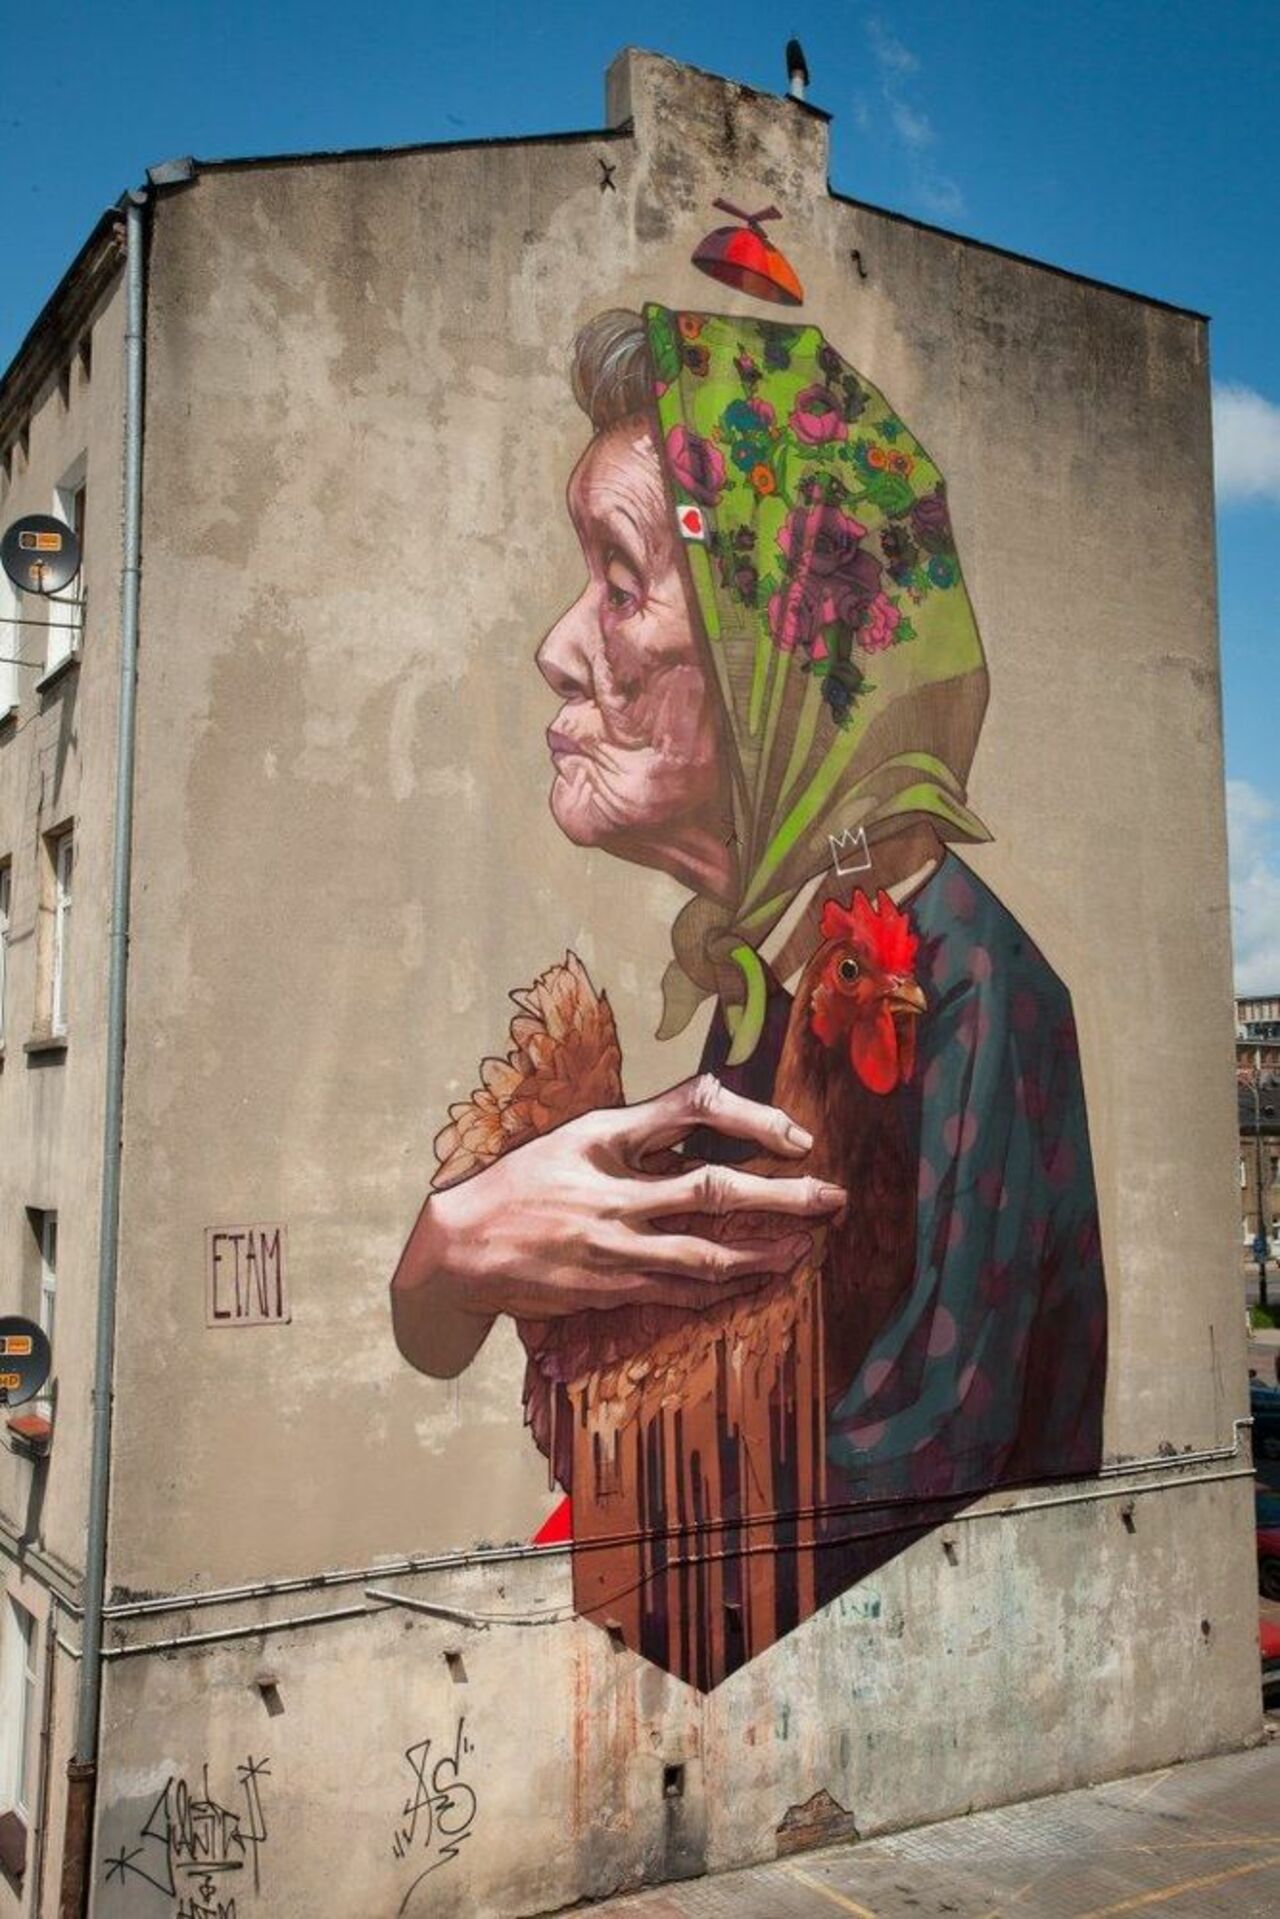 Beautiful street art by Etam Cru. Find more: http://bit.ly/1zg80An #graffiti #streetart https://t.co/3EinGChIE6